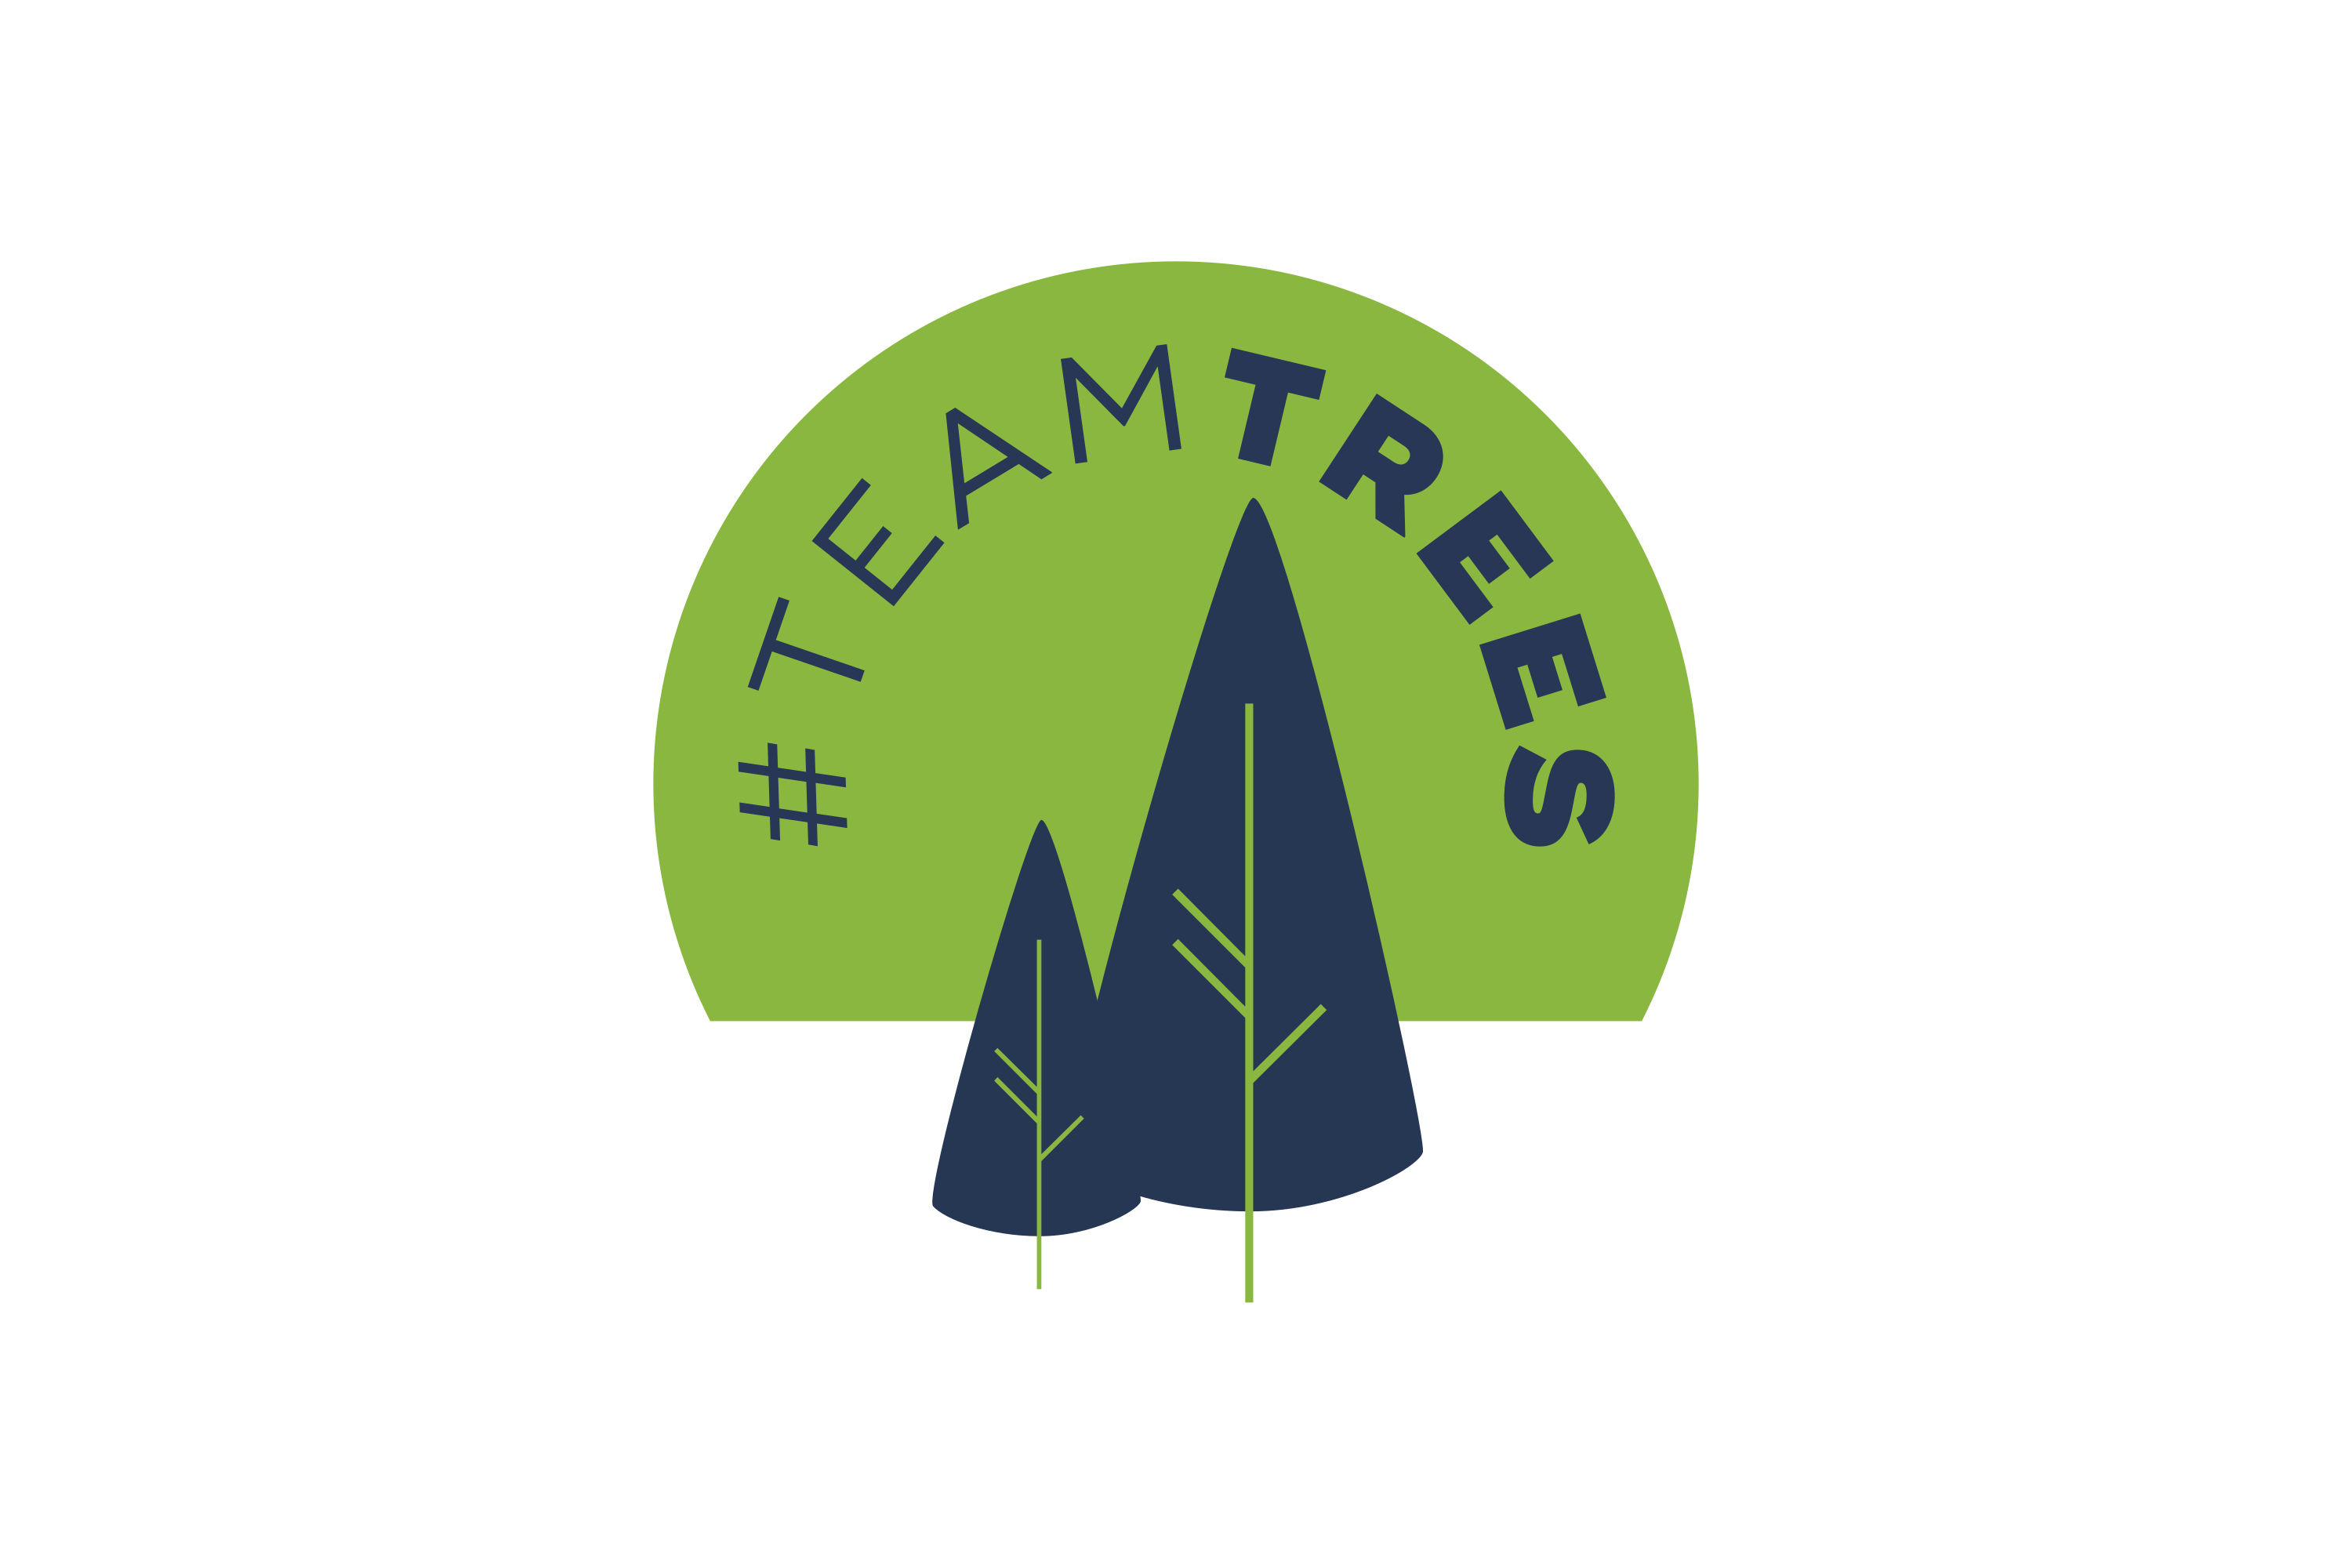 Download #TeamTrees Logo in SVG Vector or PNG File Format - Logo.wine